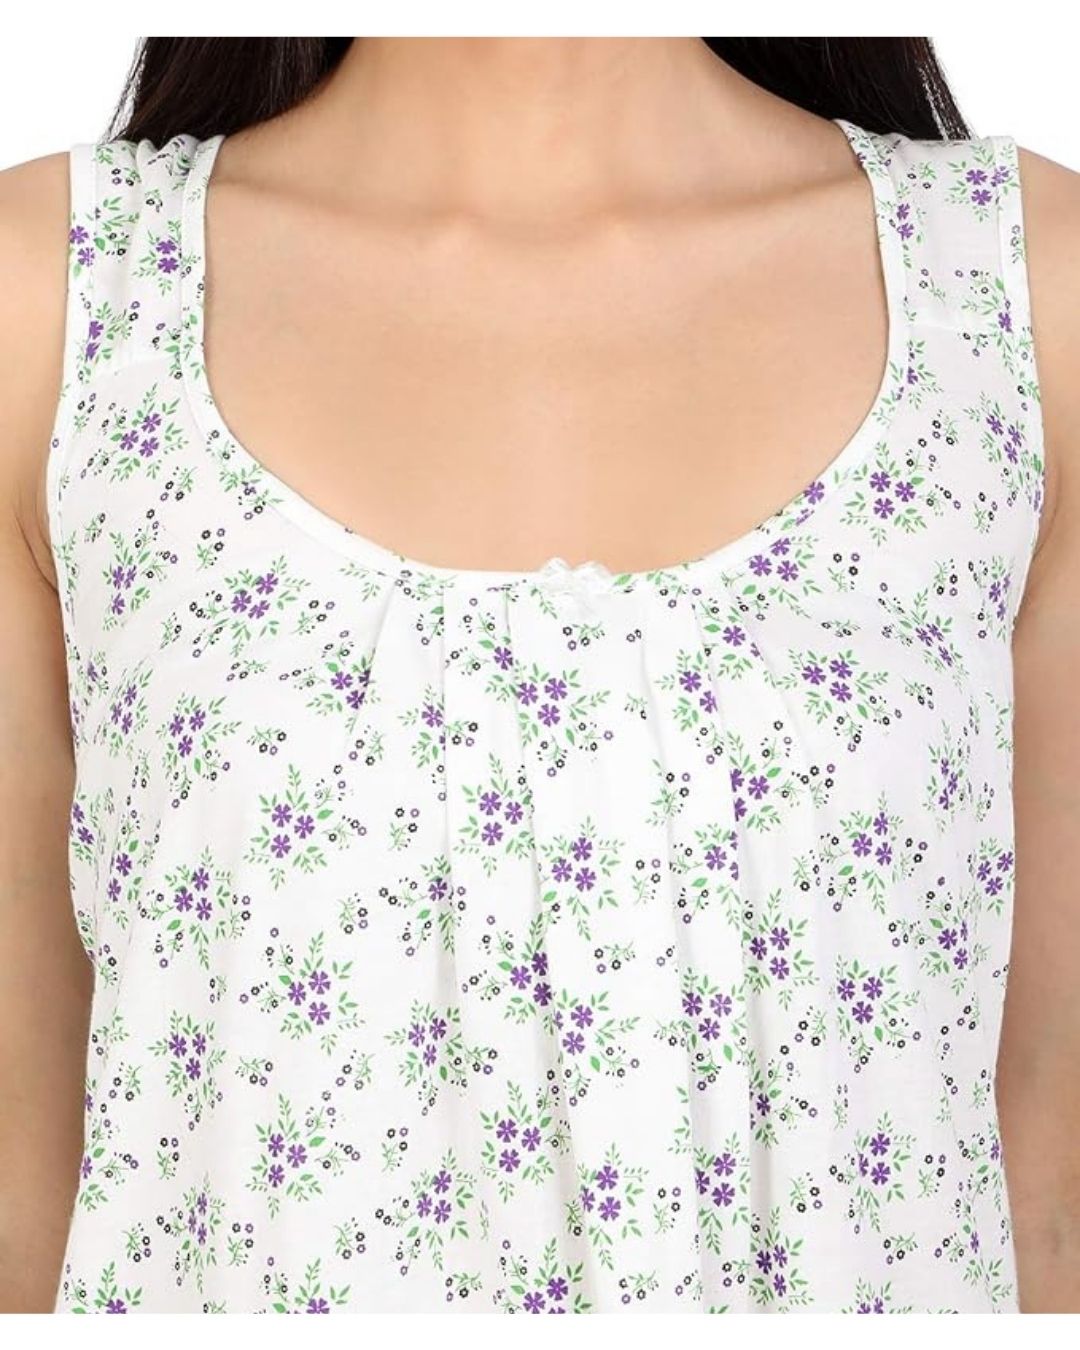 TWGE Cotton Full Length Camisole for Women - Long Innerwear - Color Purple Flower